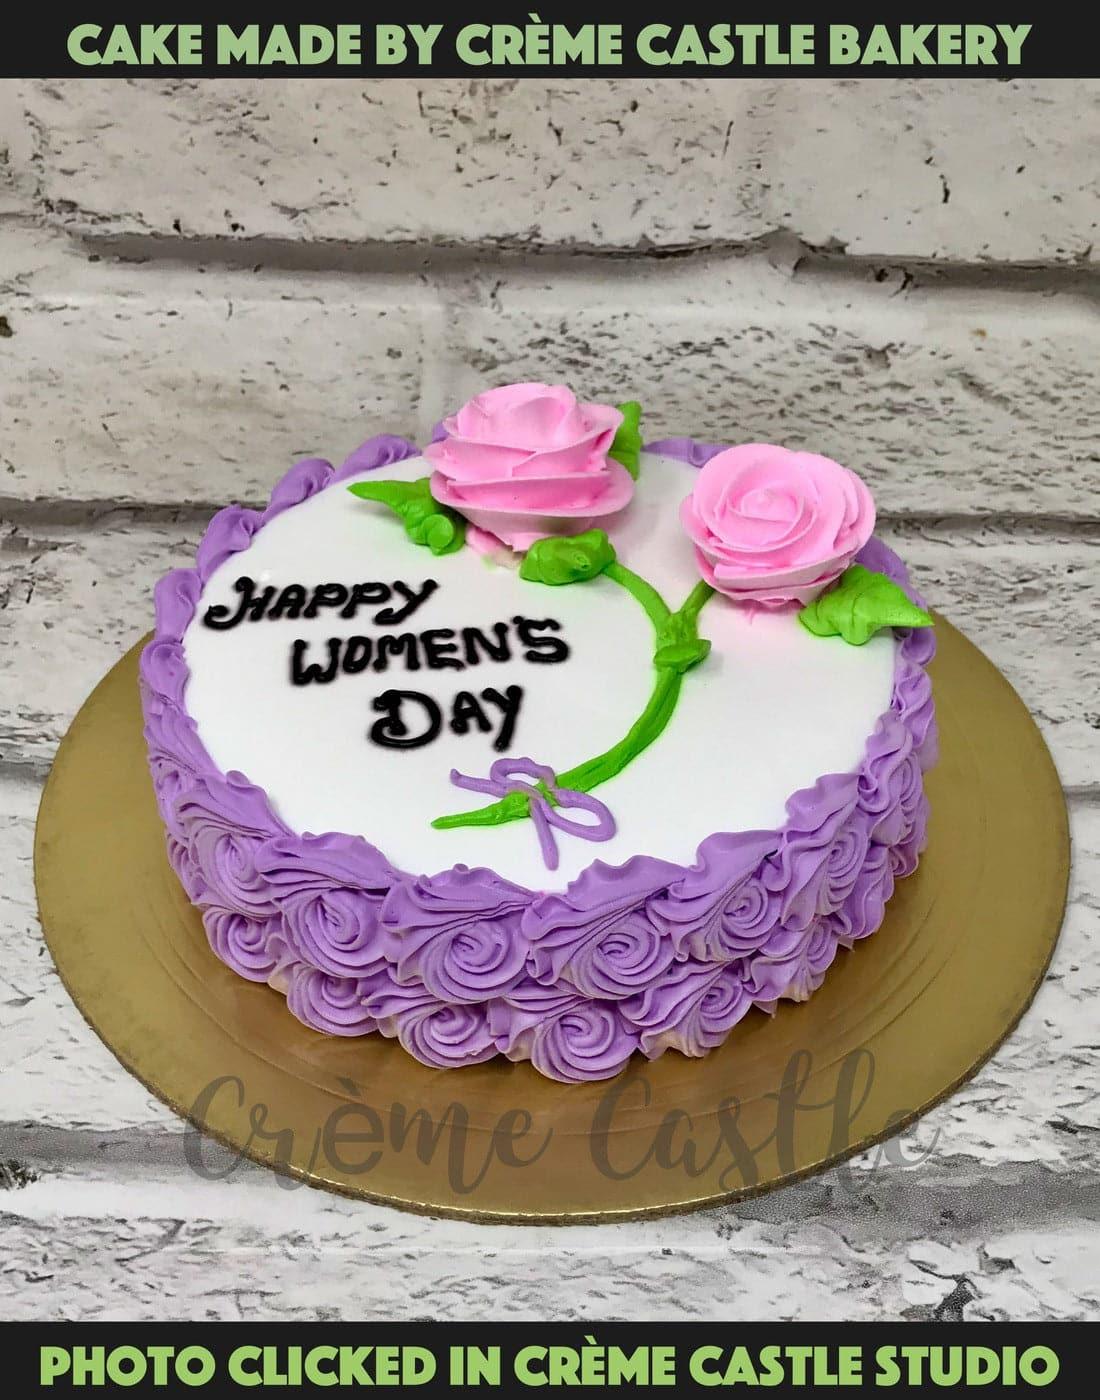 WOMEN'S DAY CAKE - Blissful Delights